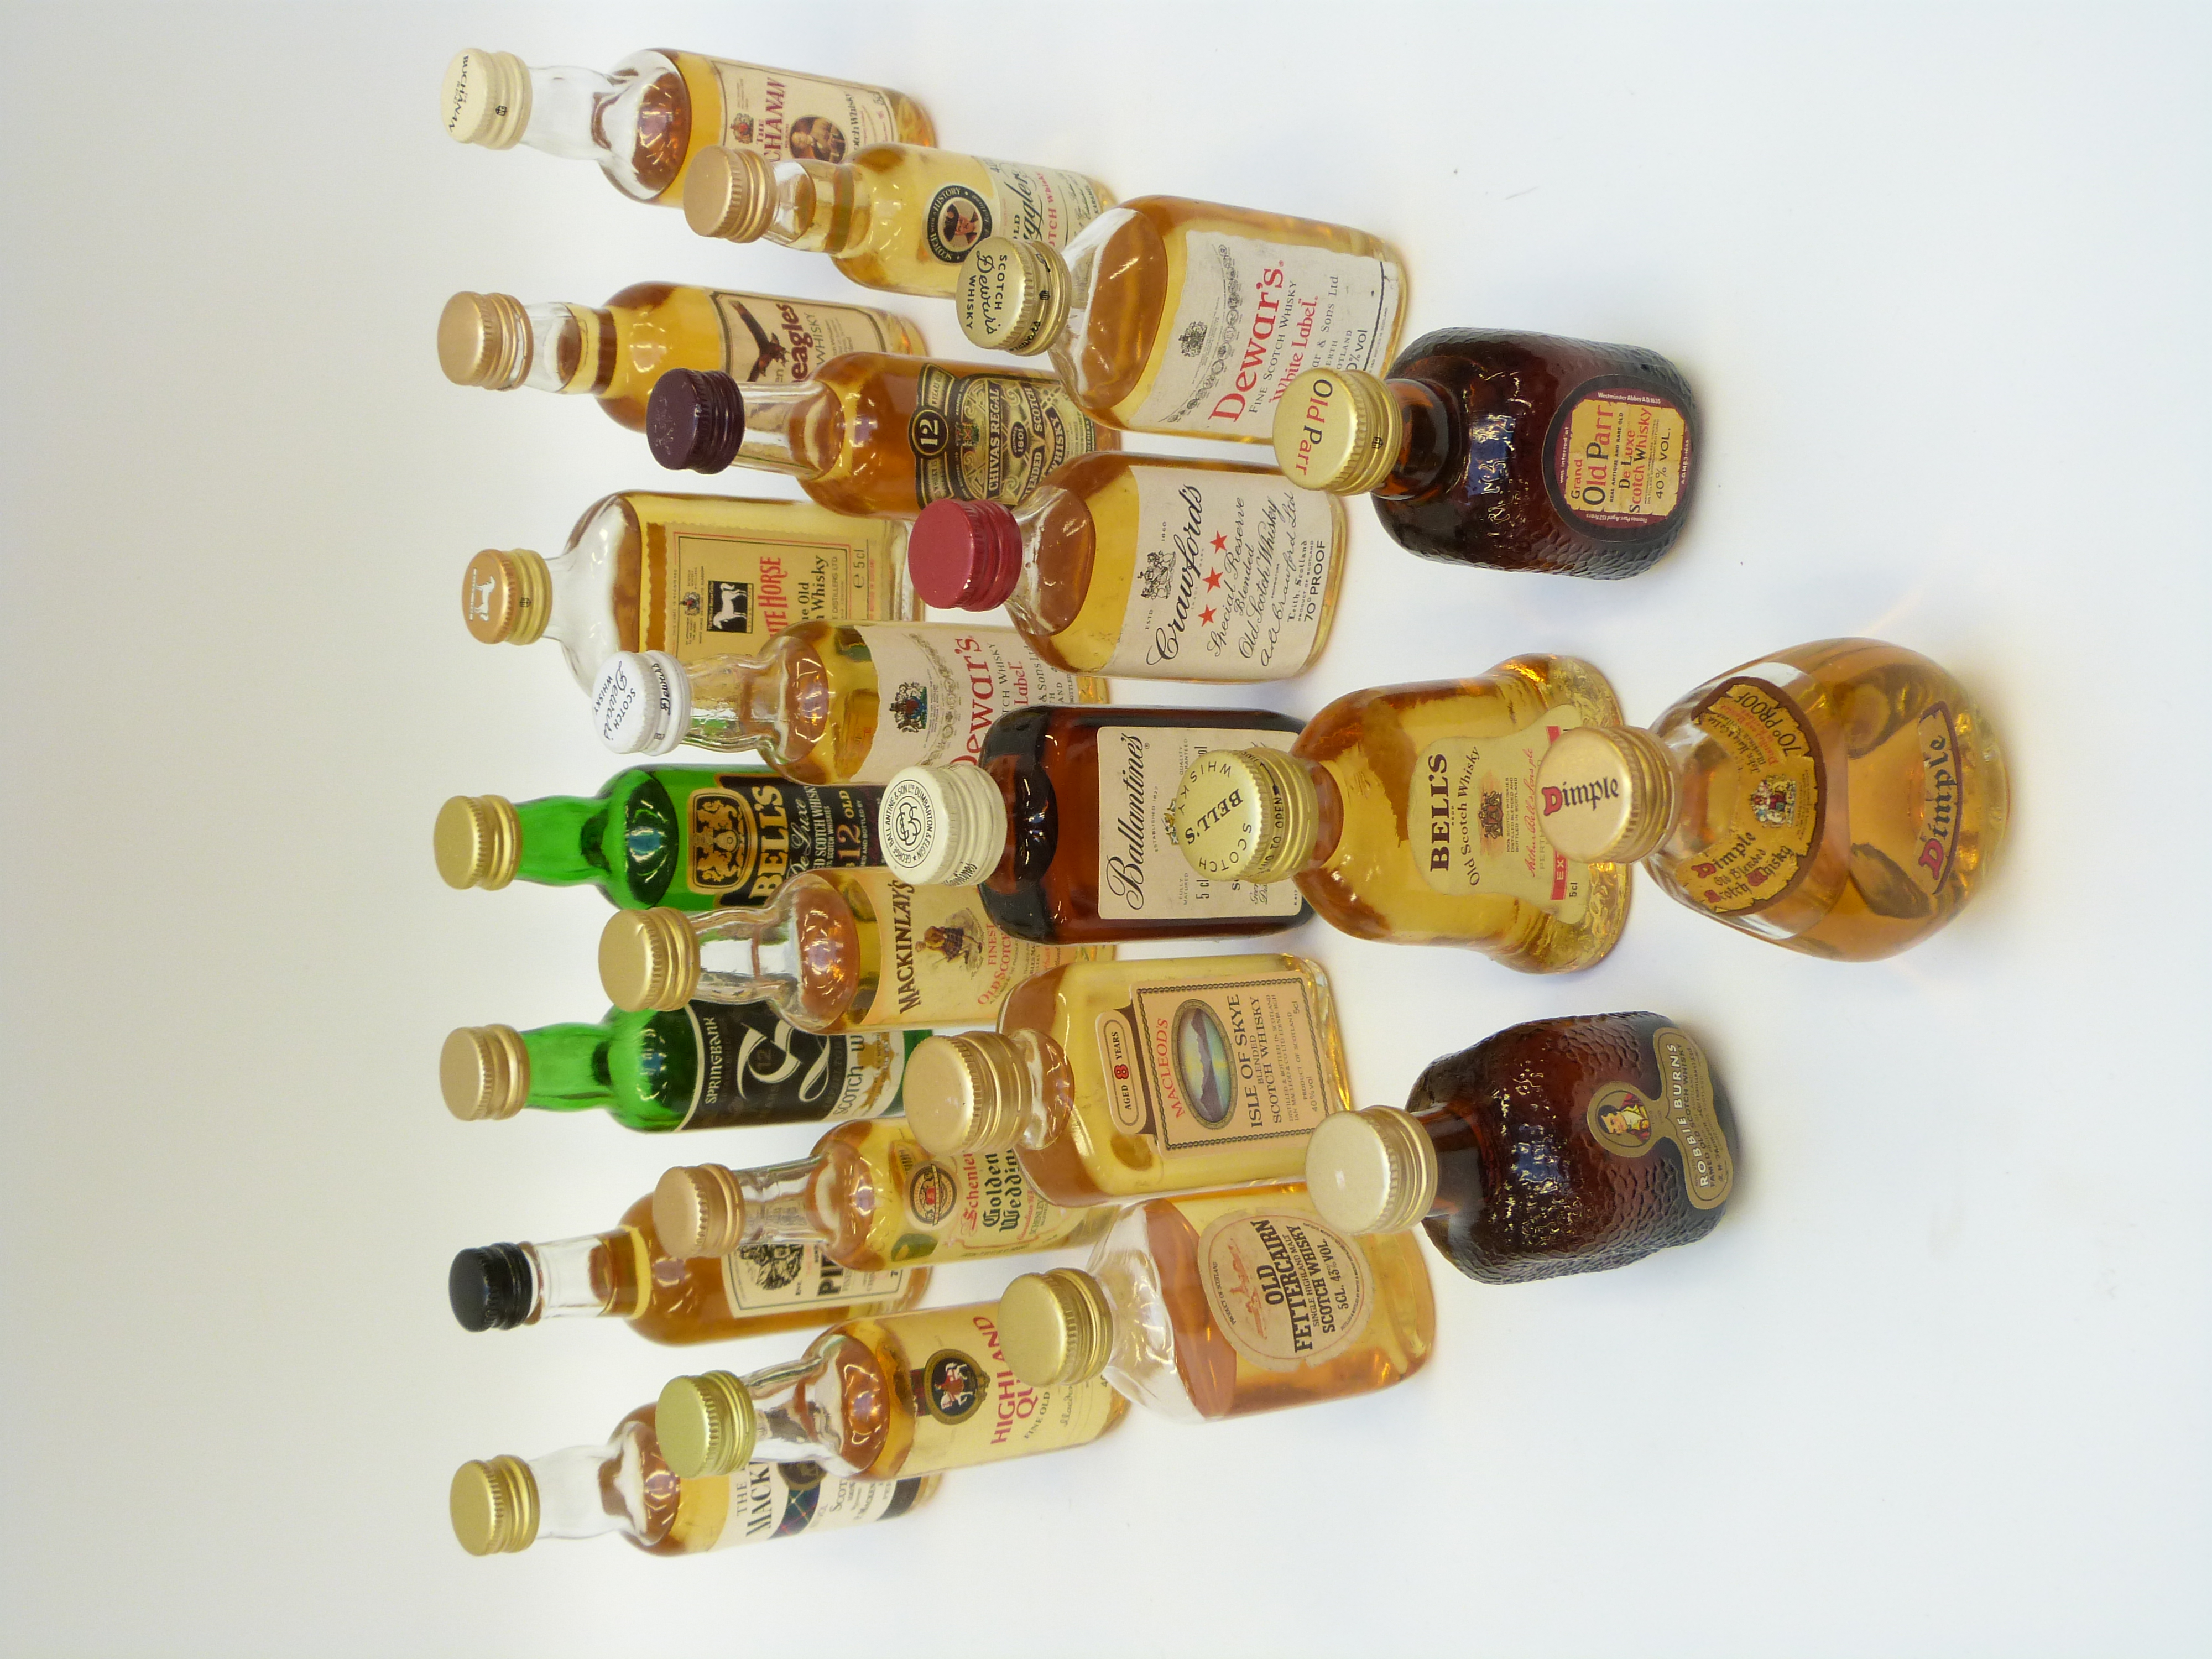 Twenty-two Scotch whisky miniatures including Macleod's 8 year, Dewar's, Dimple,